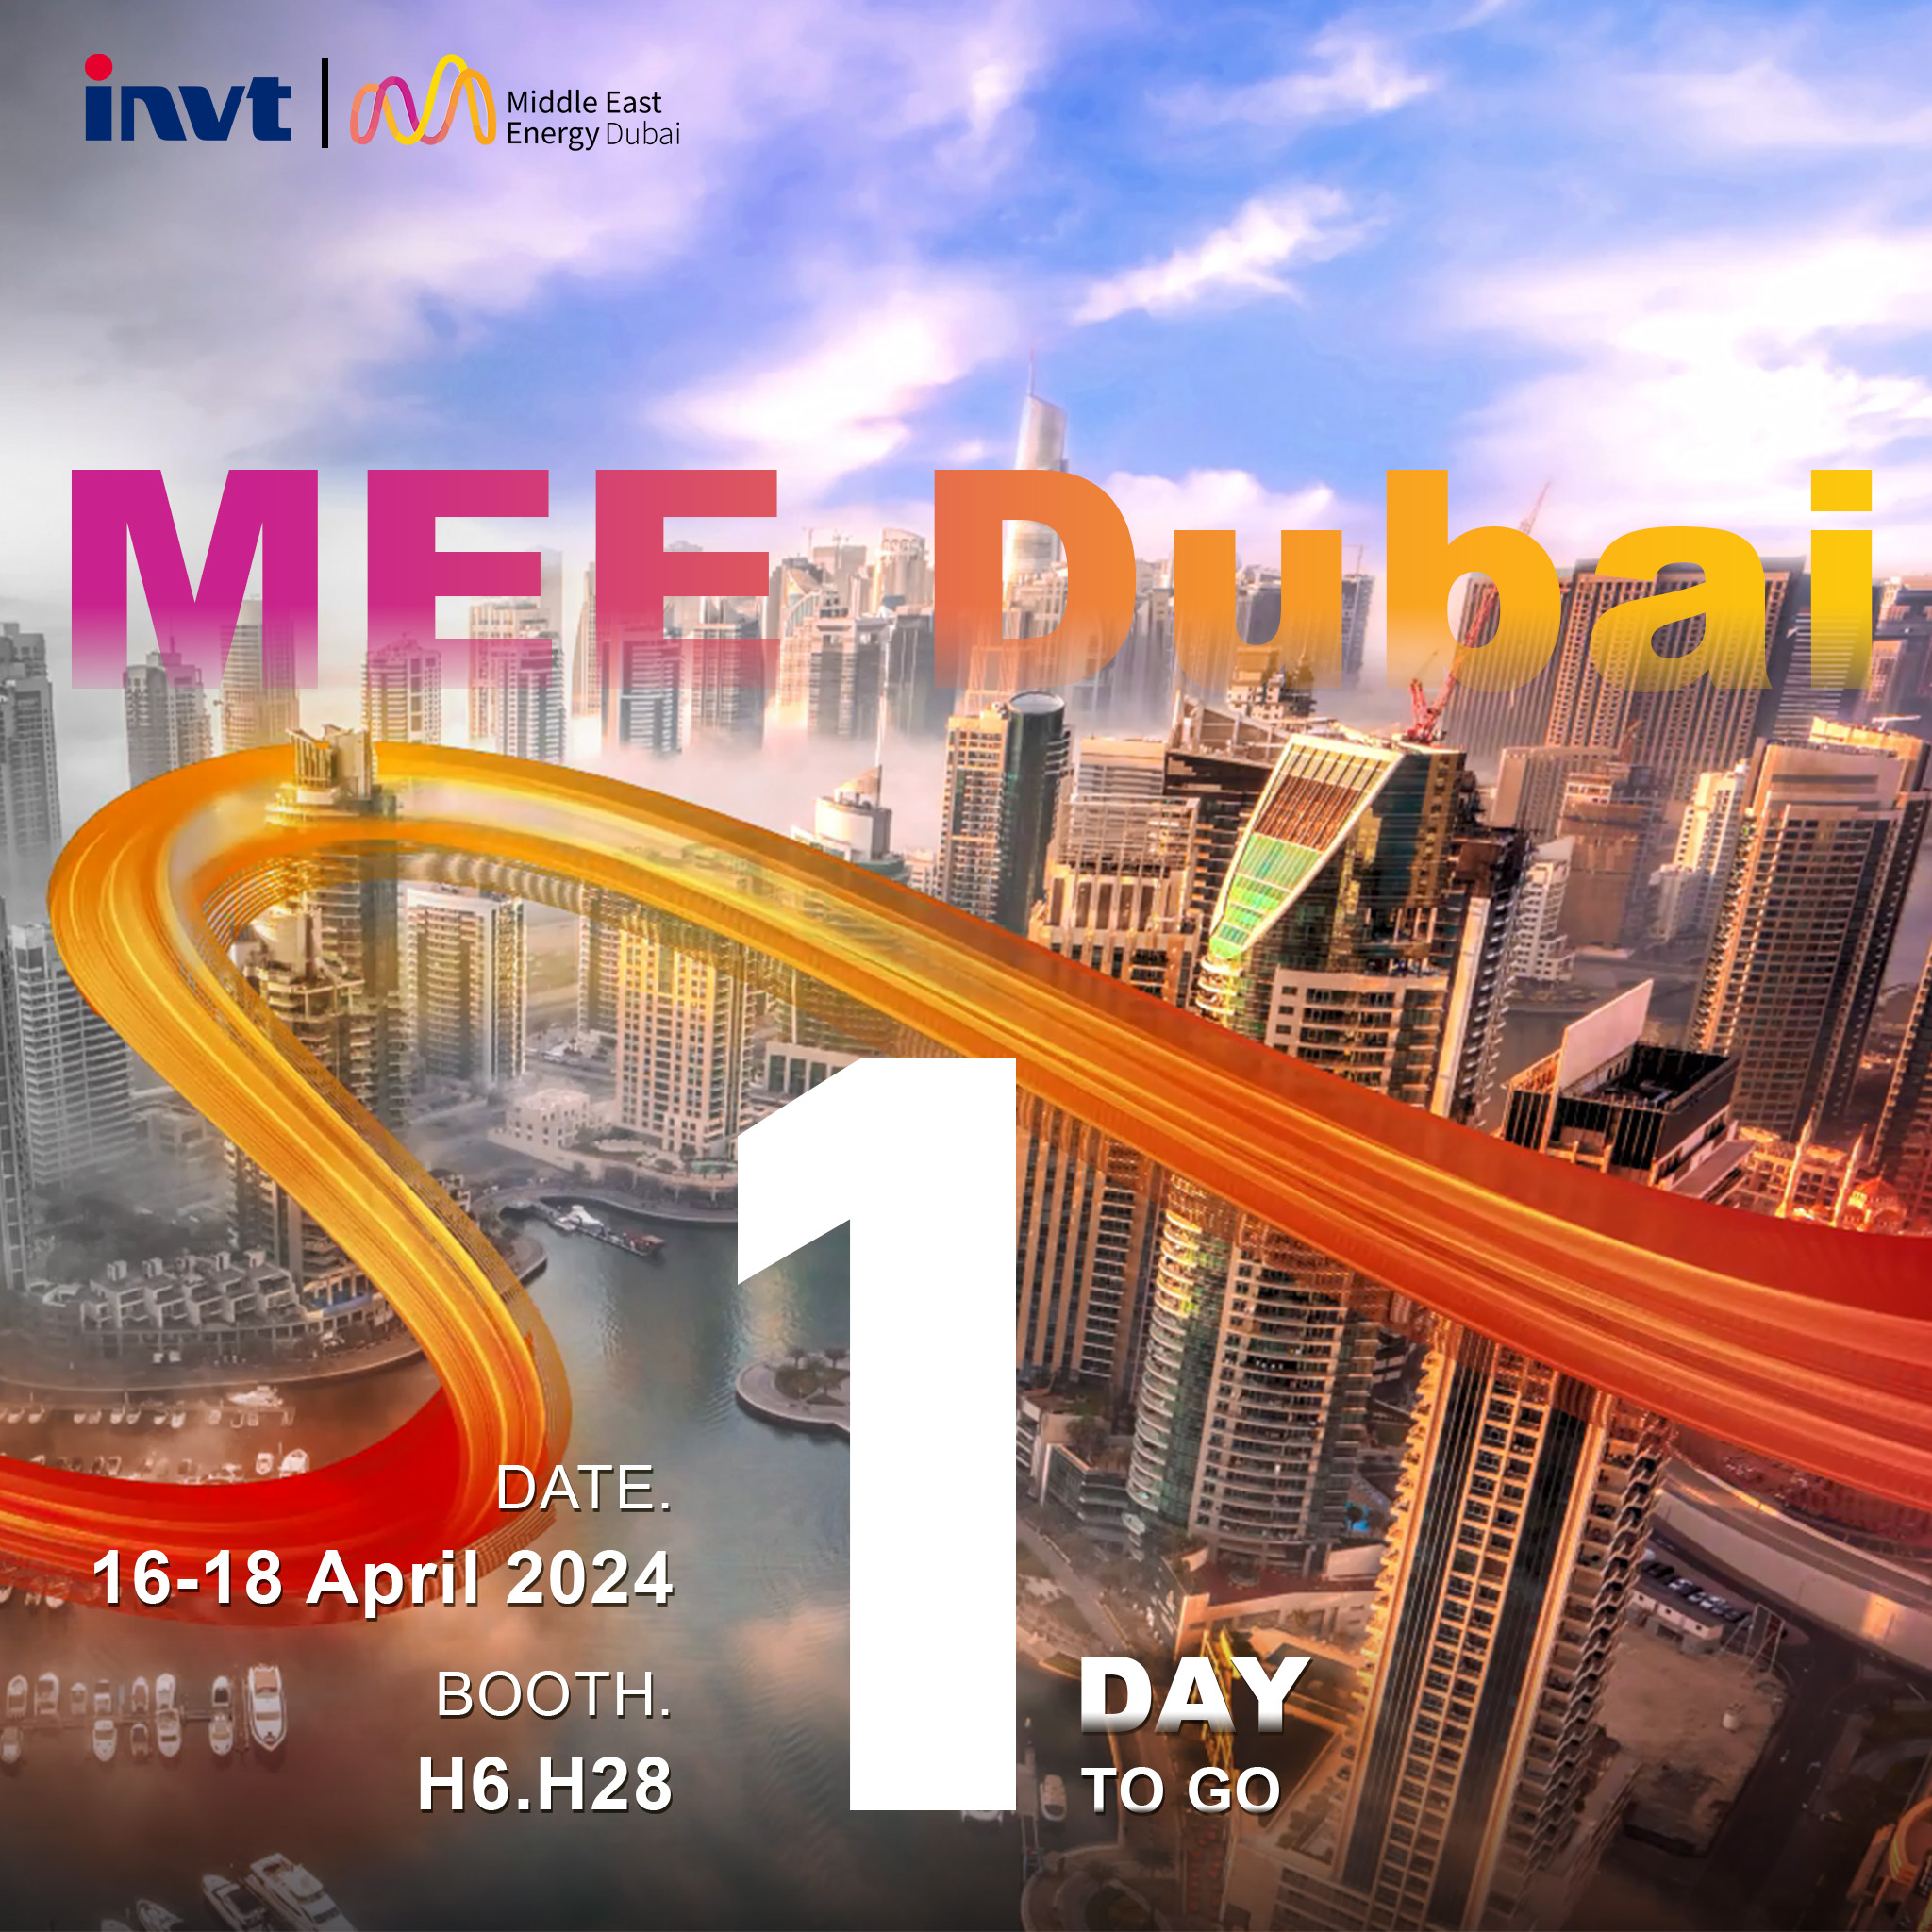 INVT see you tomorrow at Middle East Energy Dubai 2024!